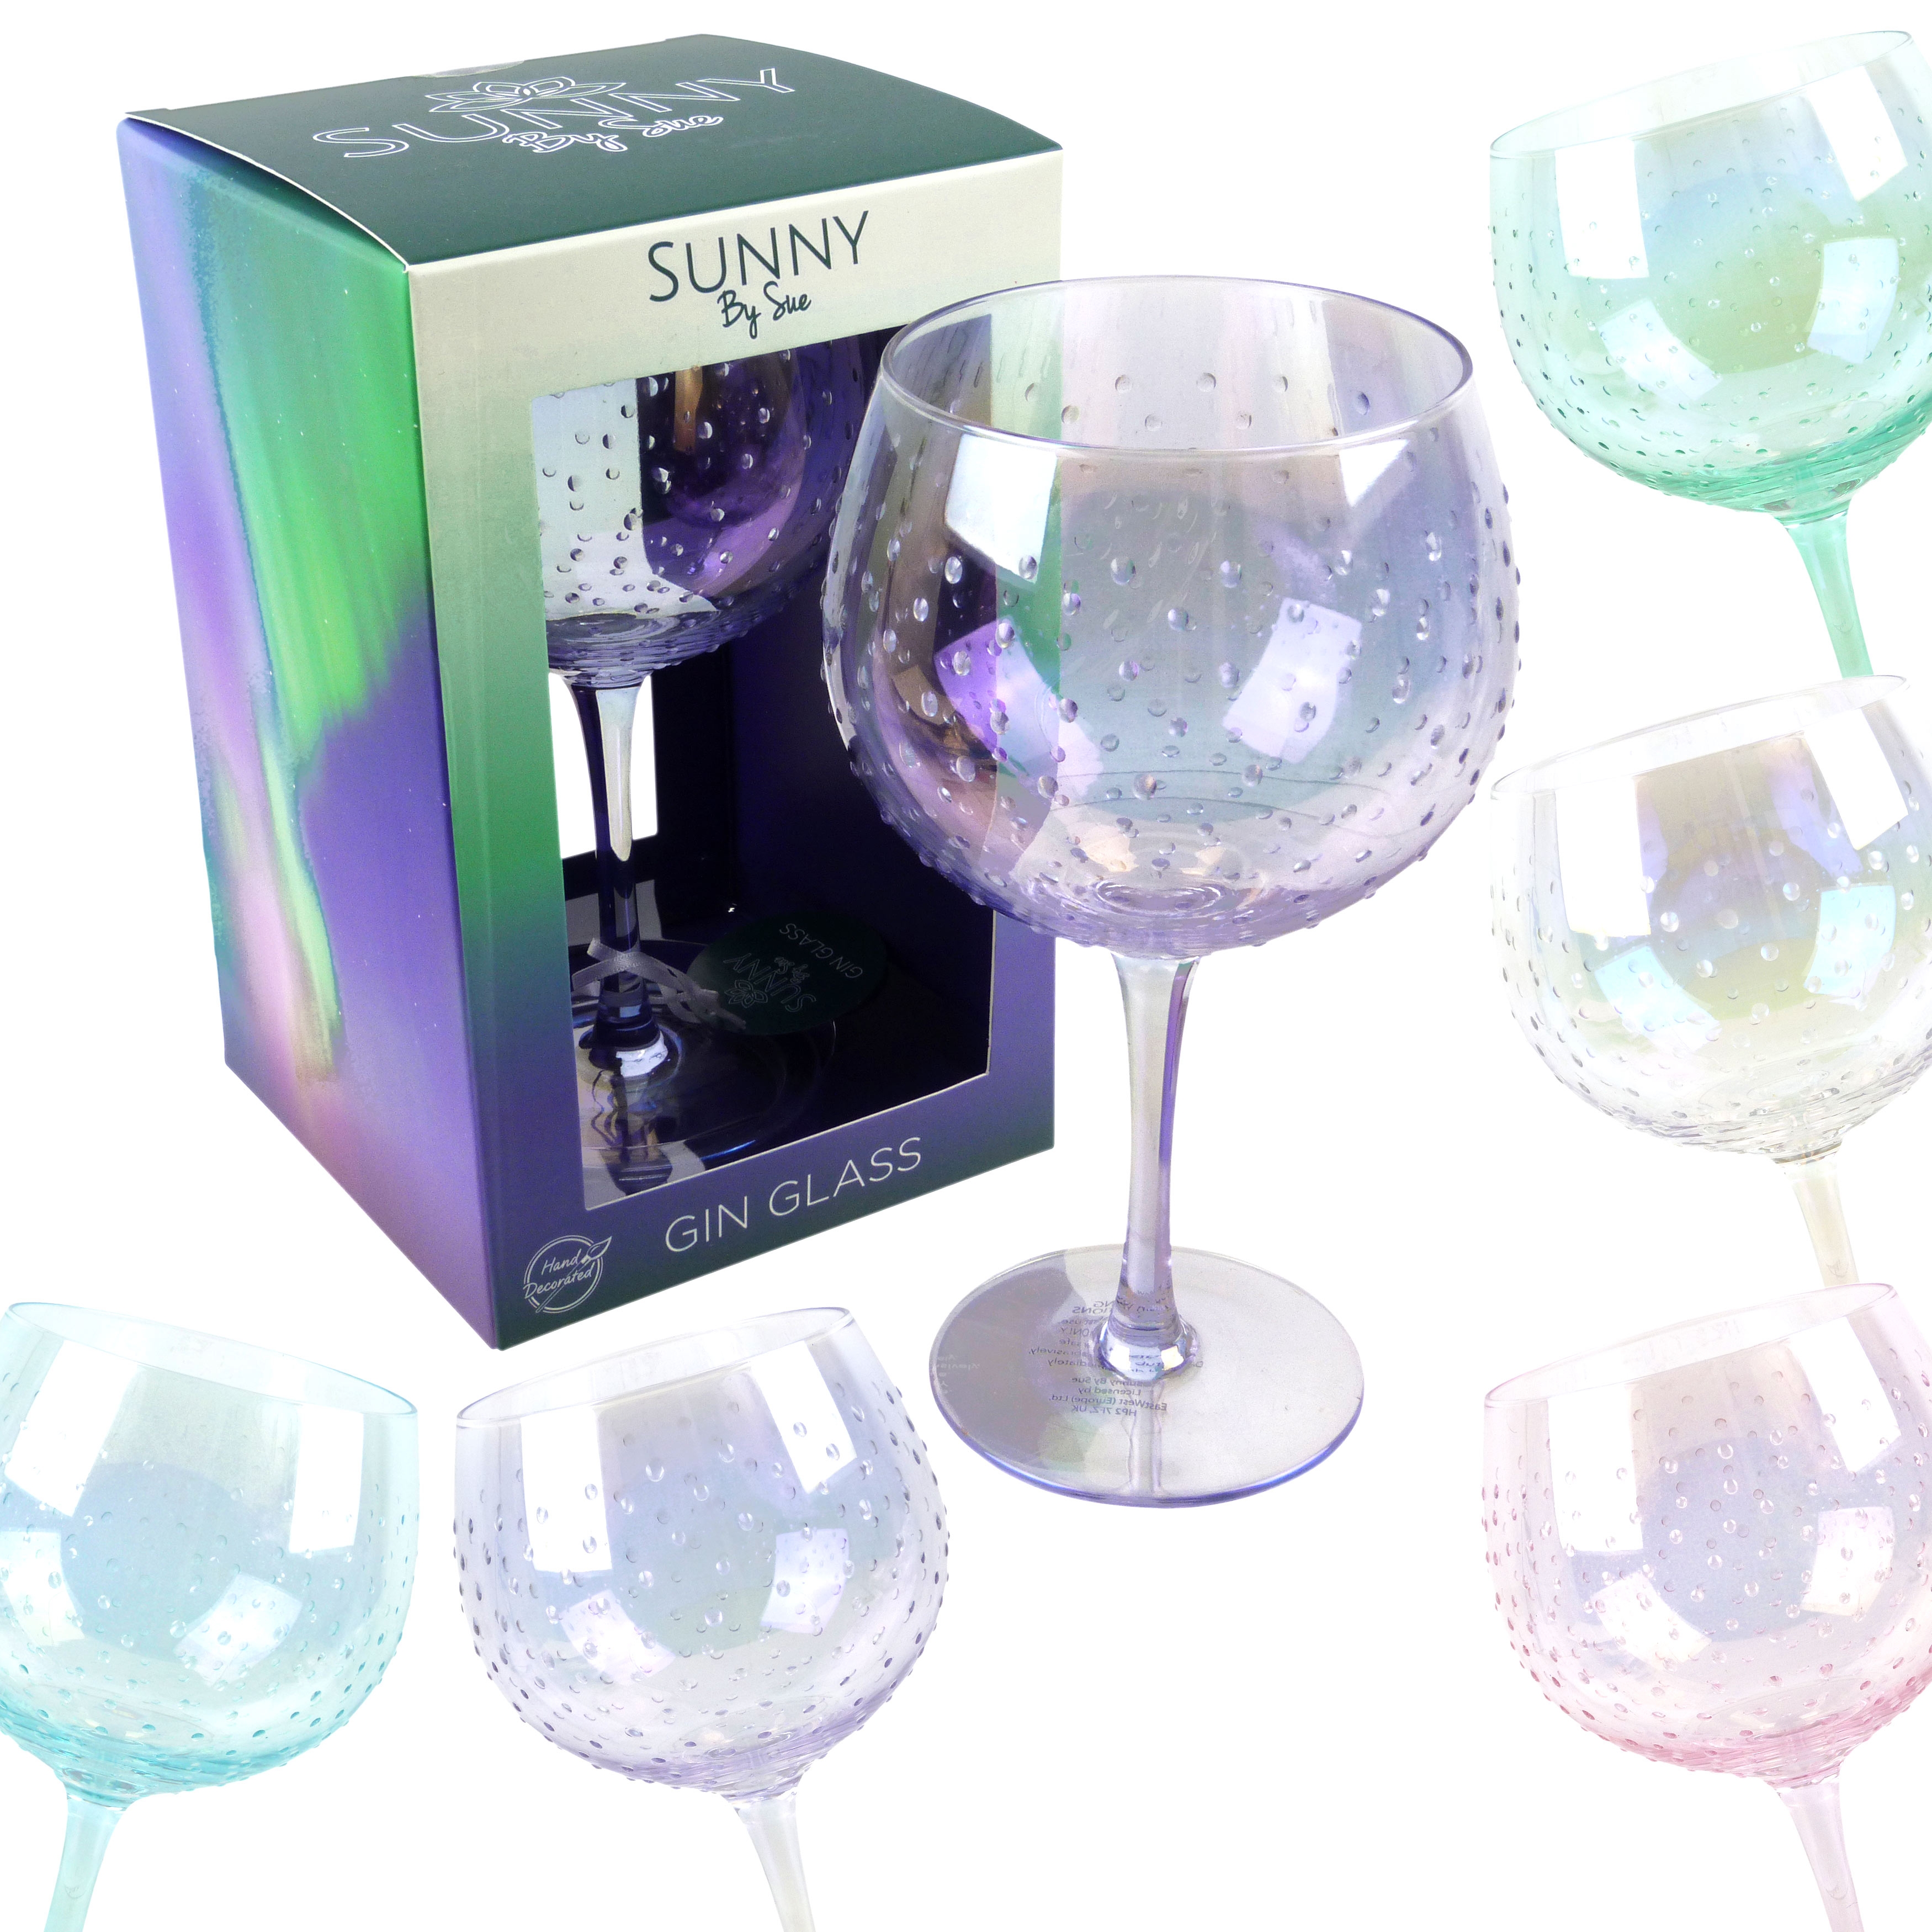 coloured glass goblets